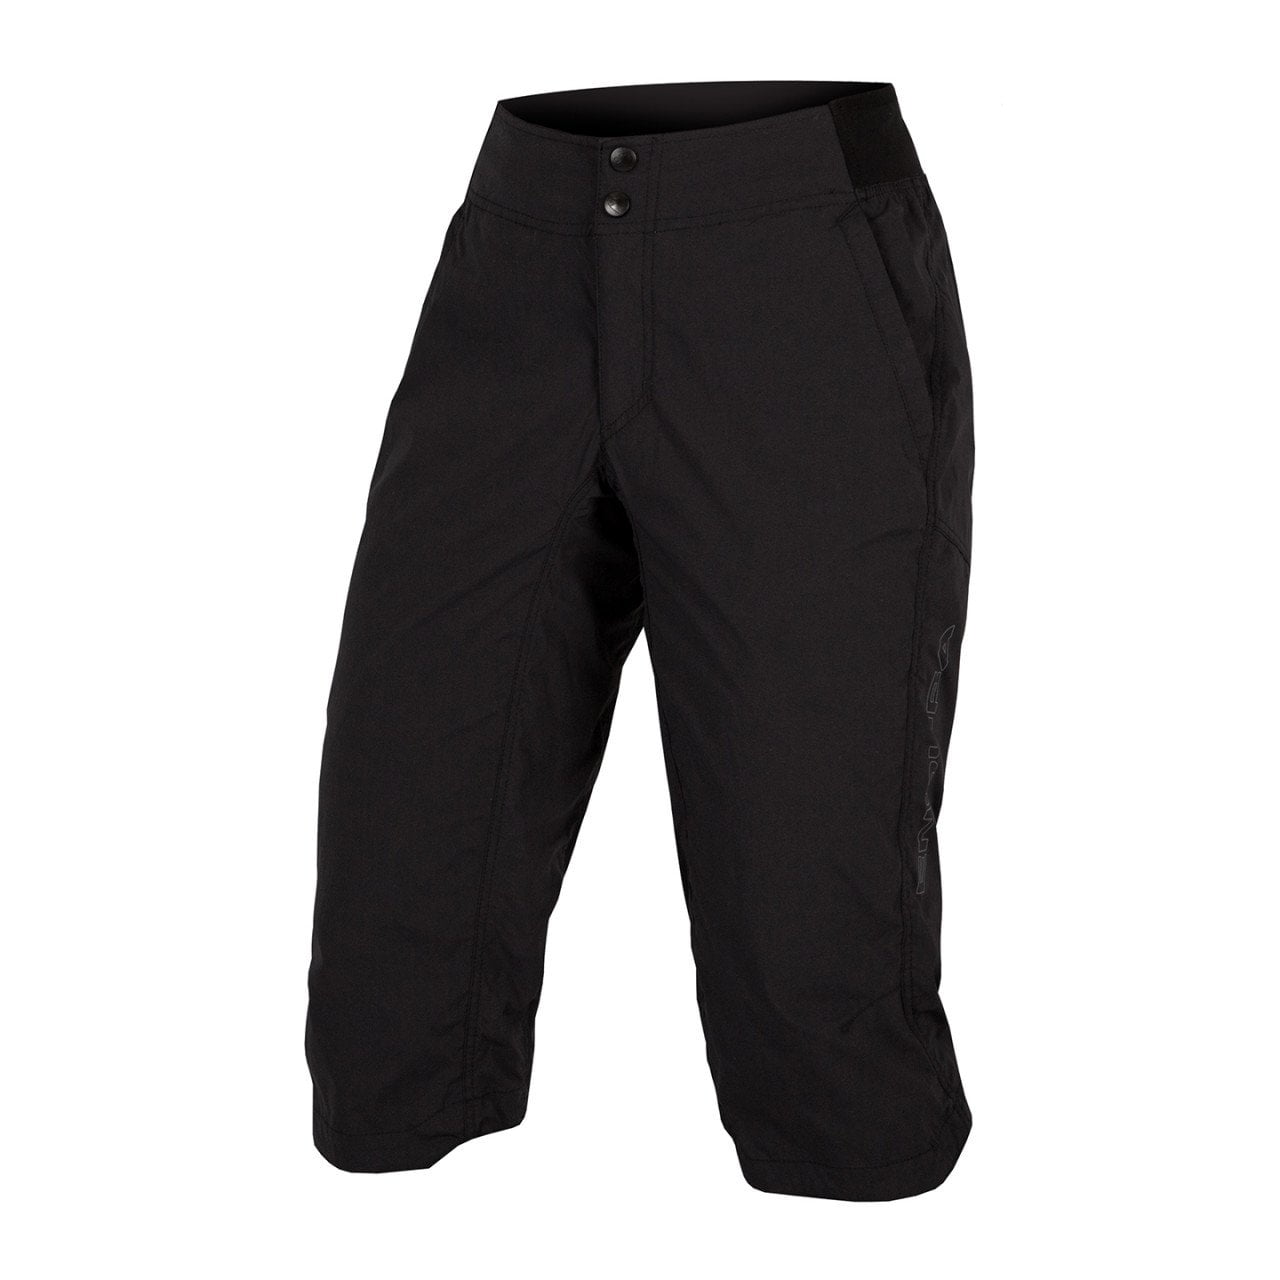 ENDURA Women's Gridlock II Trouser Black Waterproof Cycling Pants Sz XL |  eBay